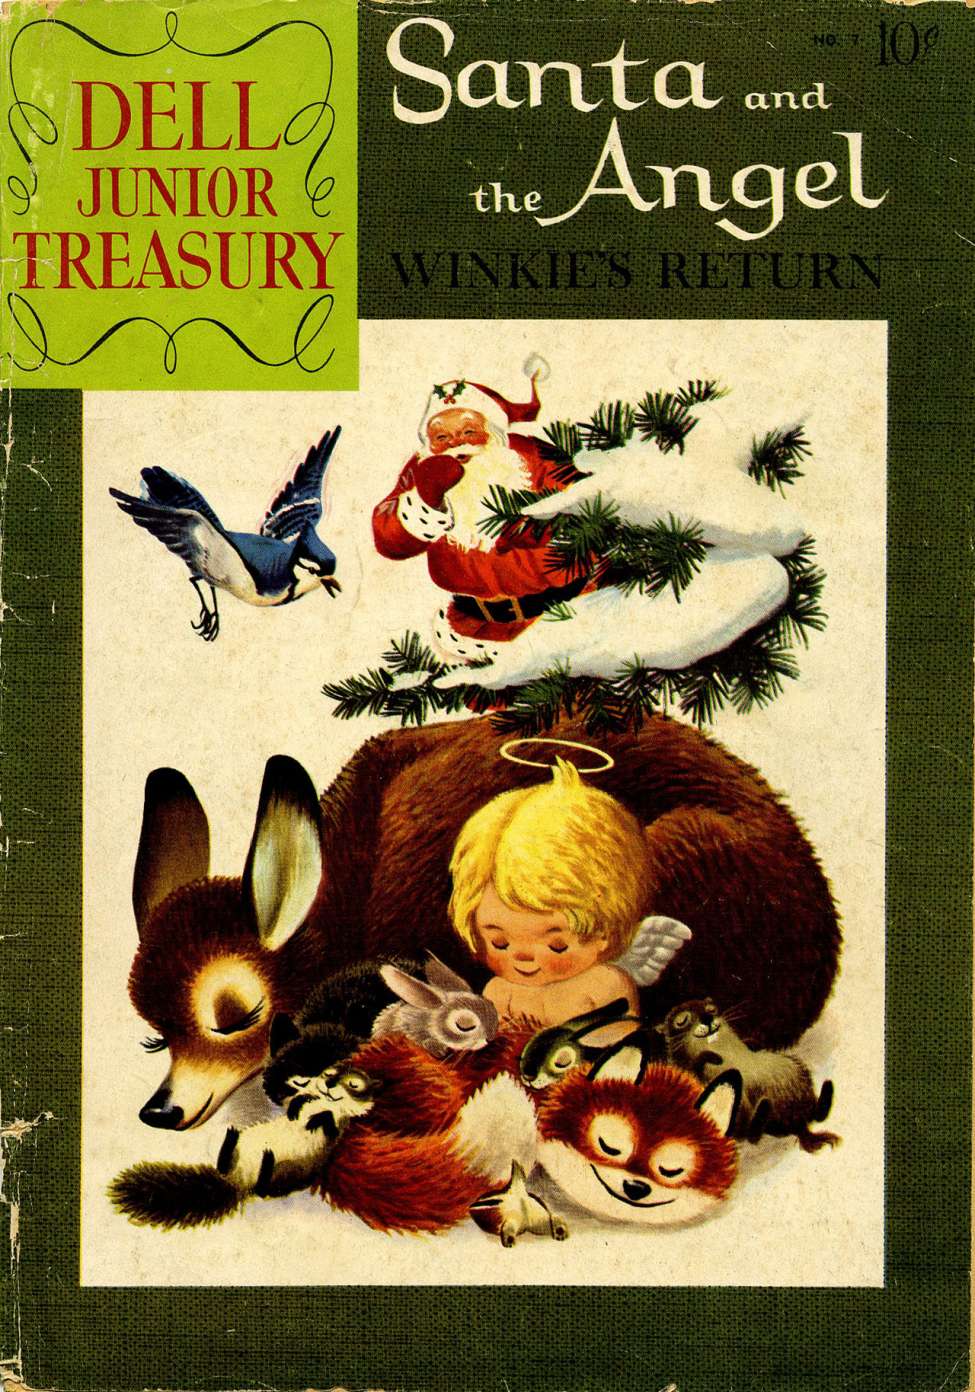 Comic Book Cover For Dell Junior Treasury 7 - Santa and the Angel